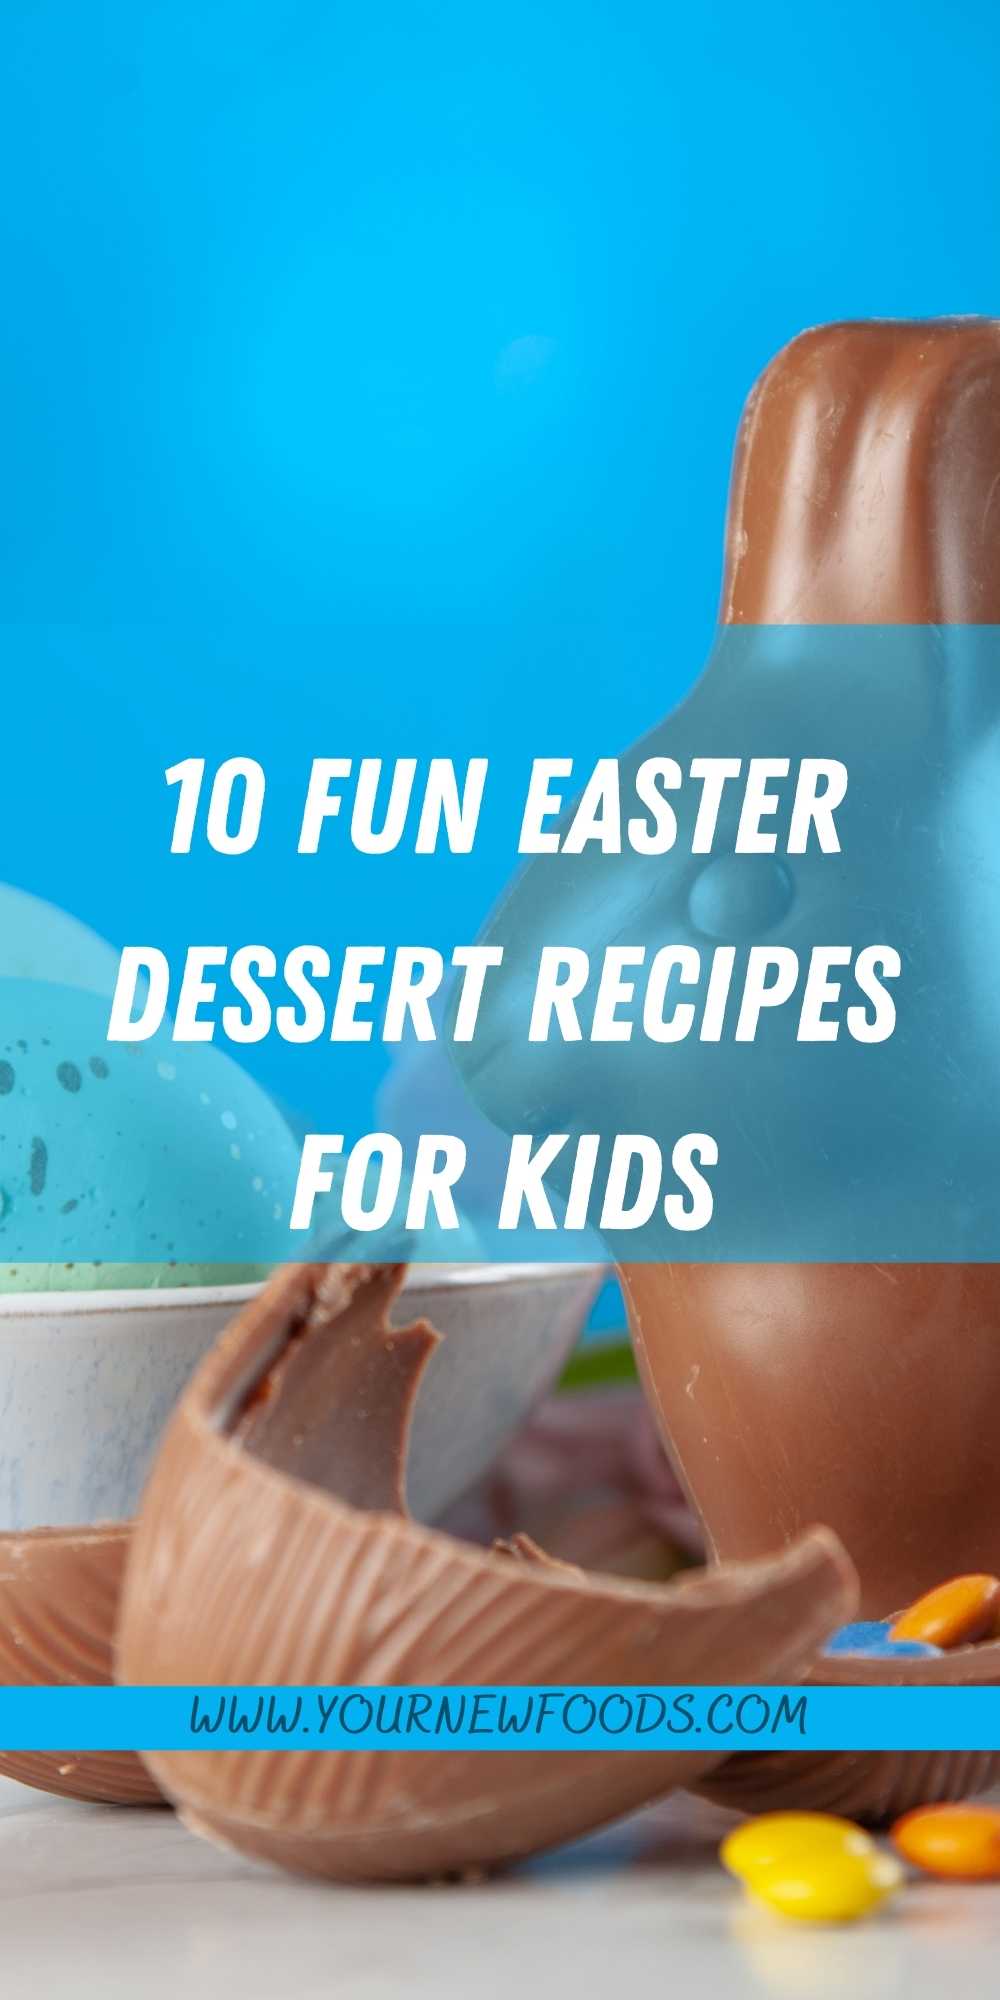 Easter desserts recipes for kids